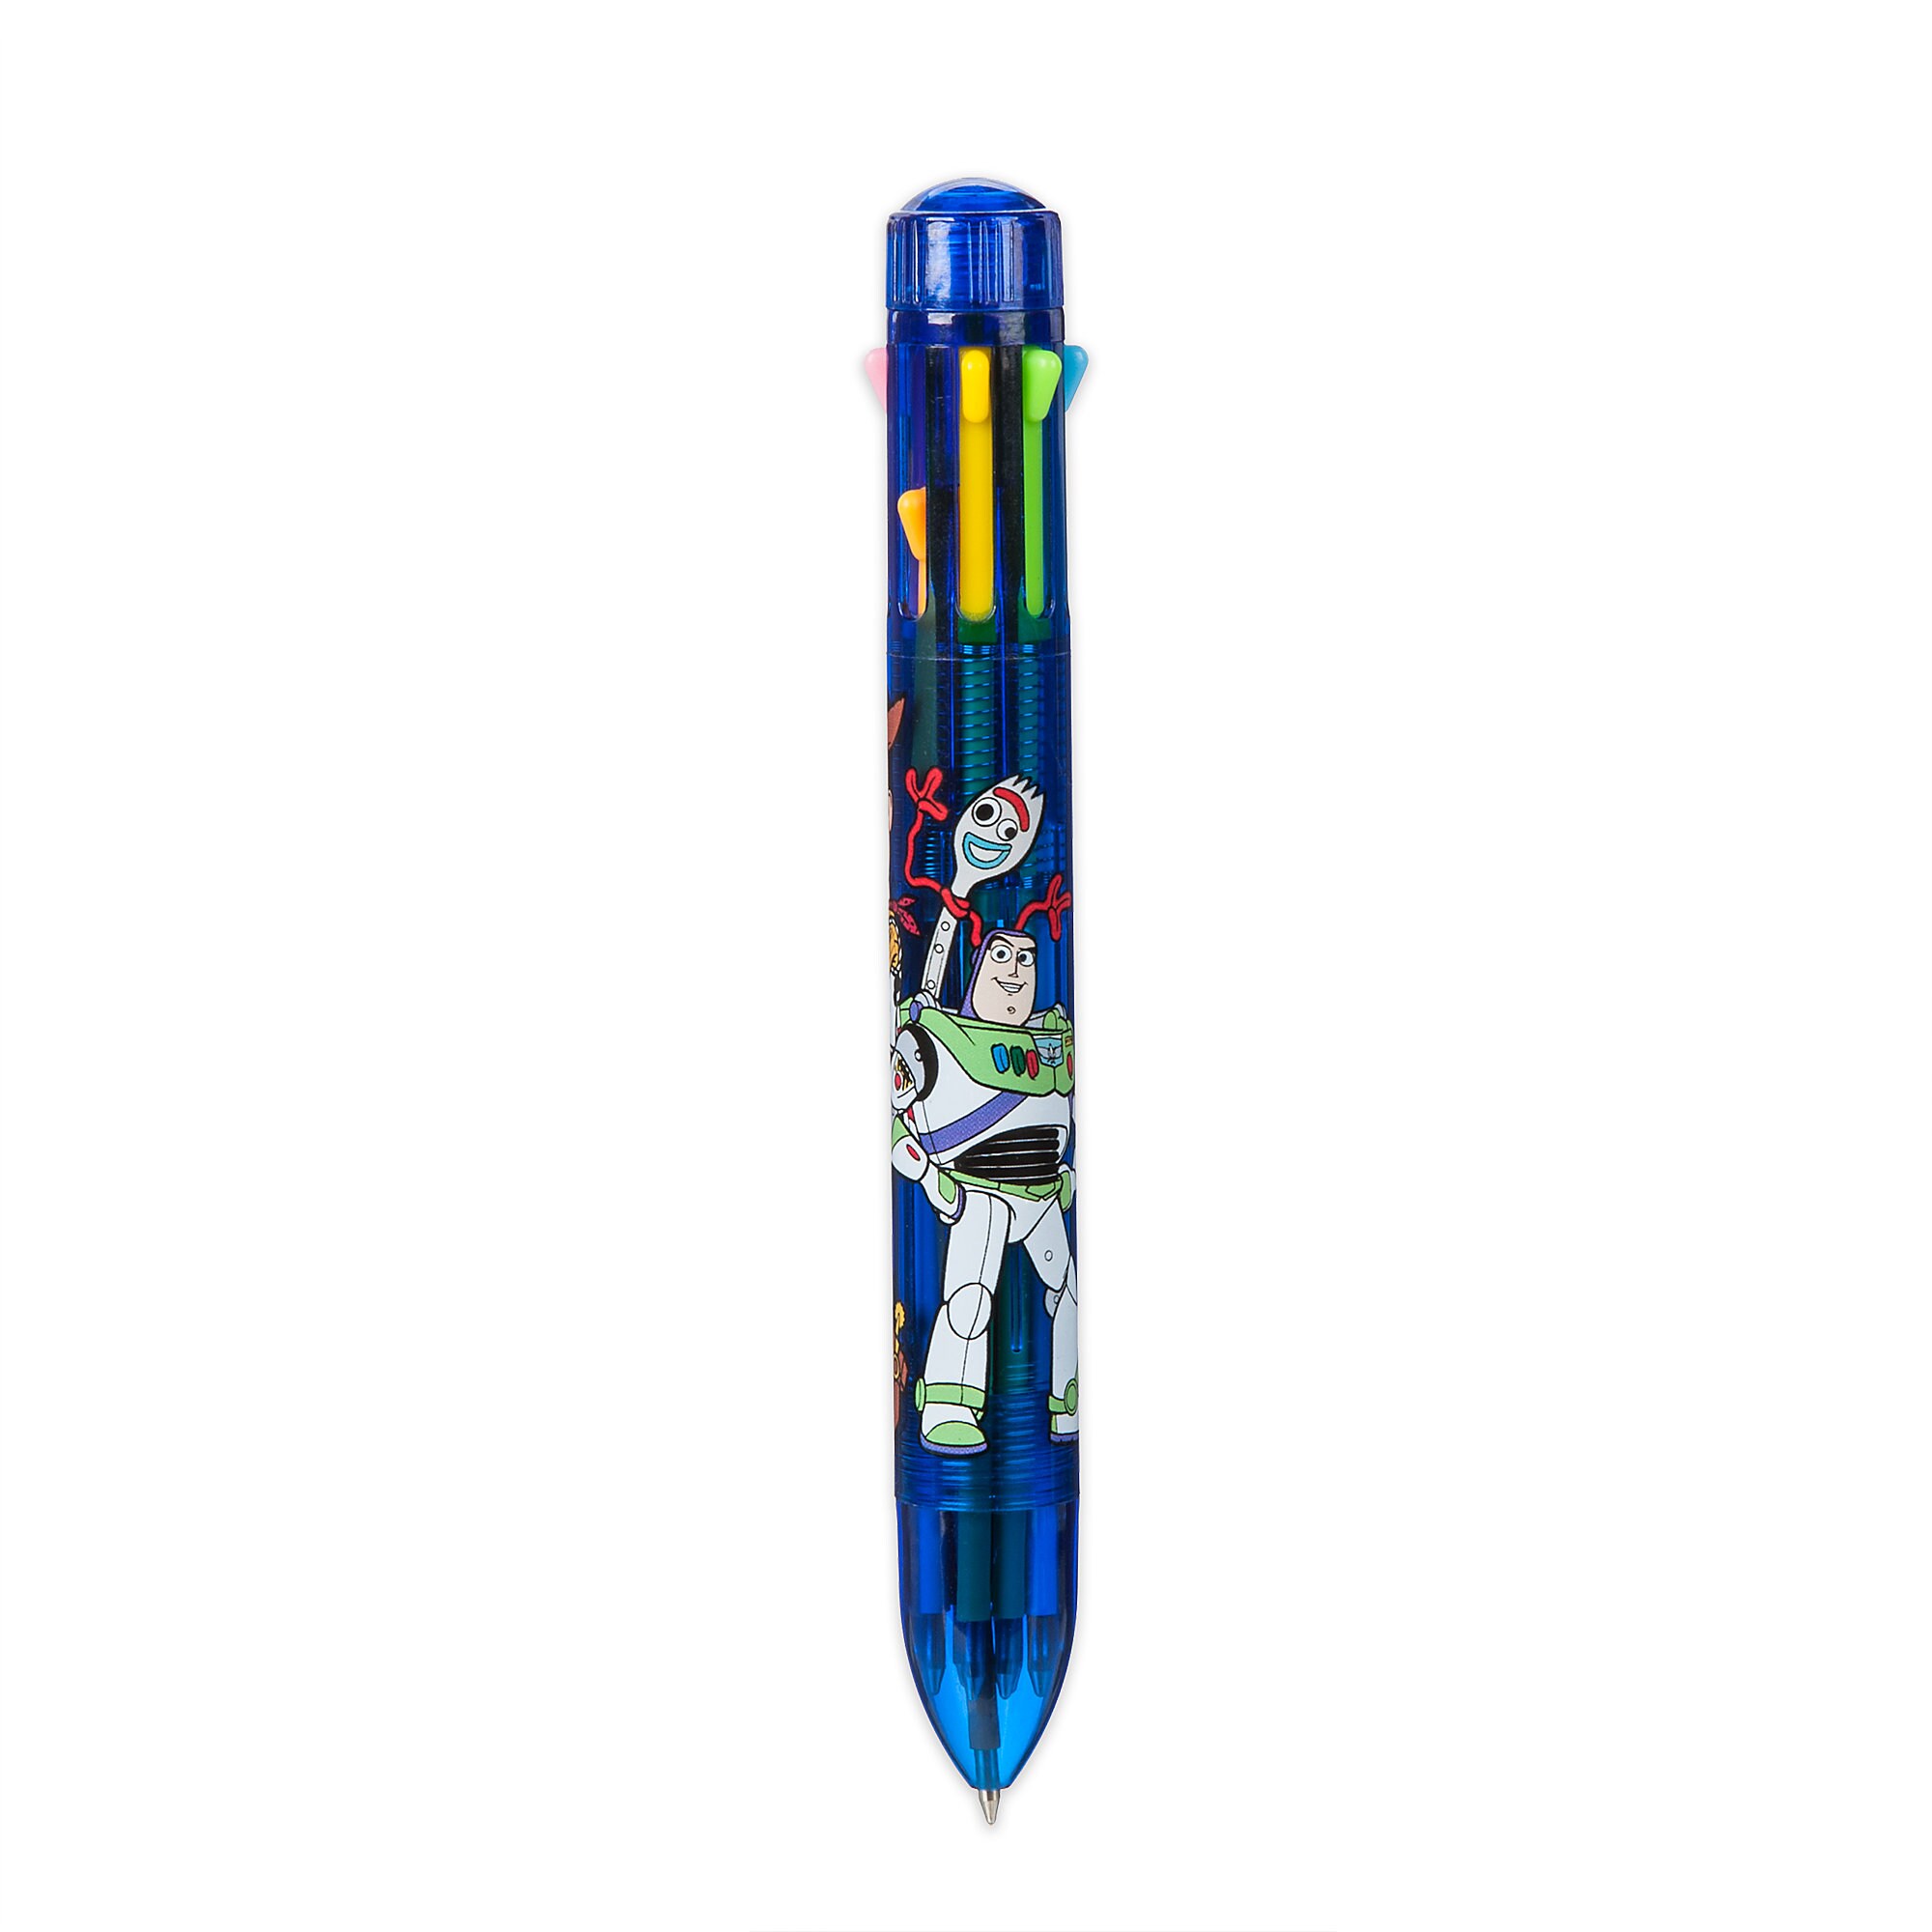 Toy Story 4 Multicolor Pen